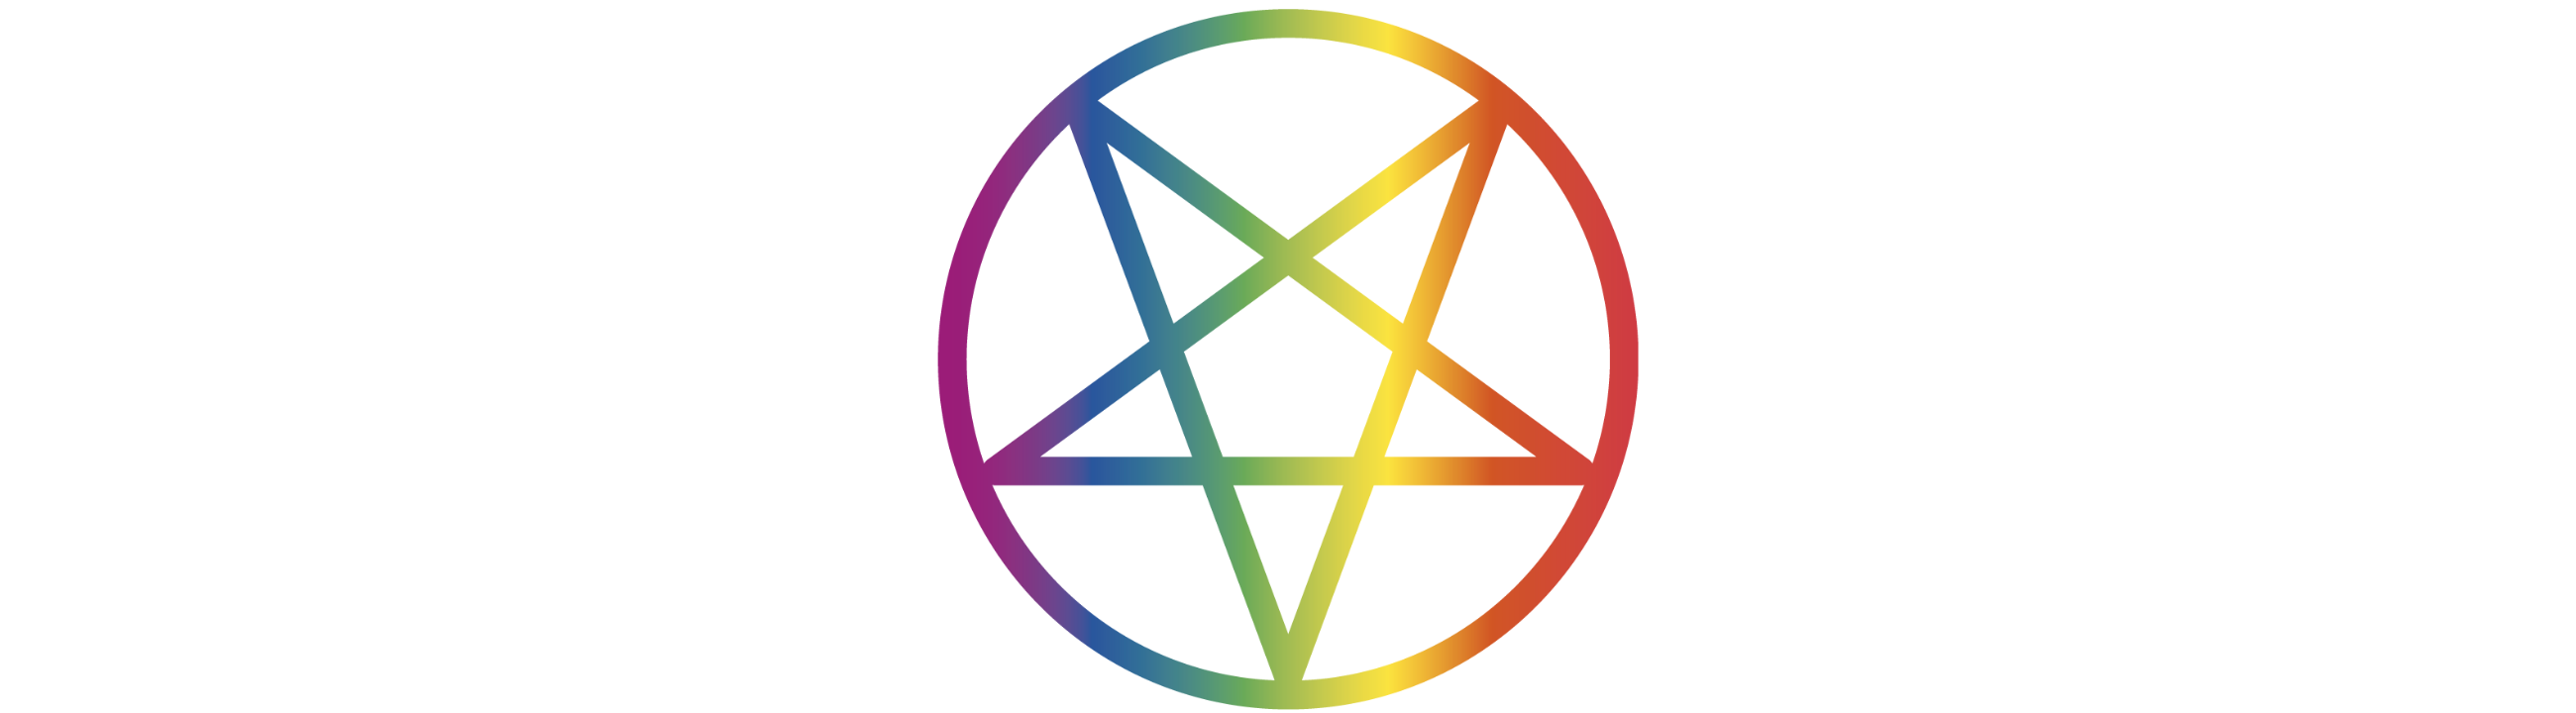 Regenbogen Pentagramm